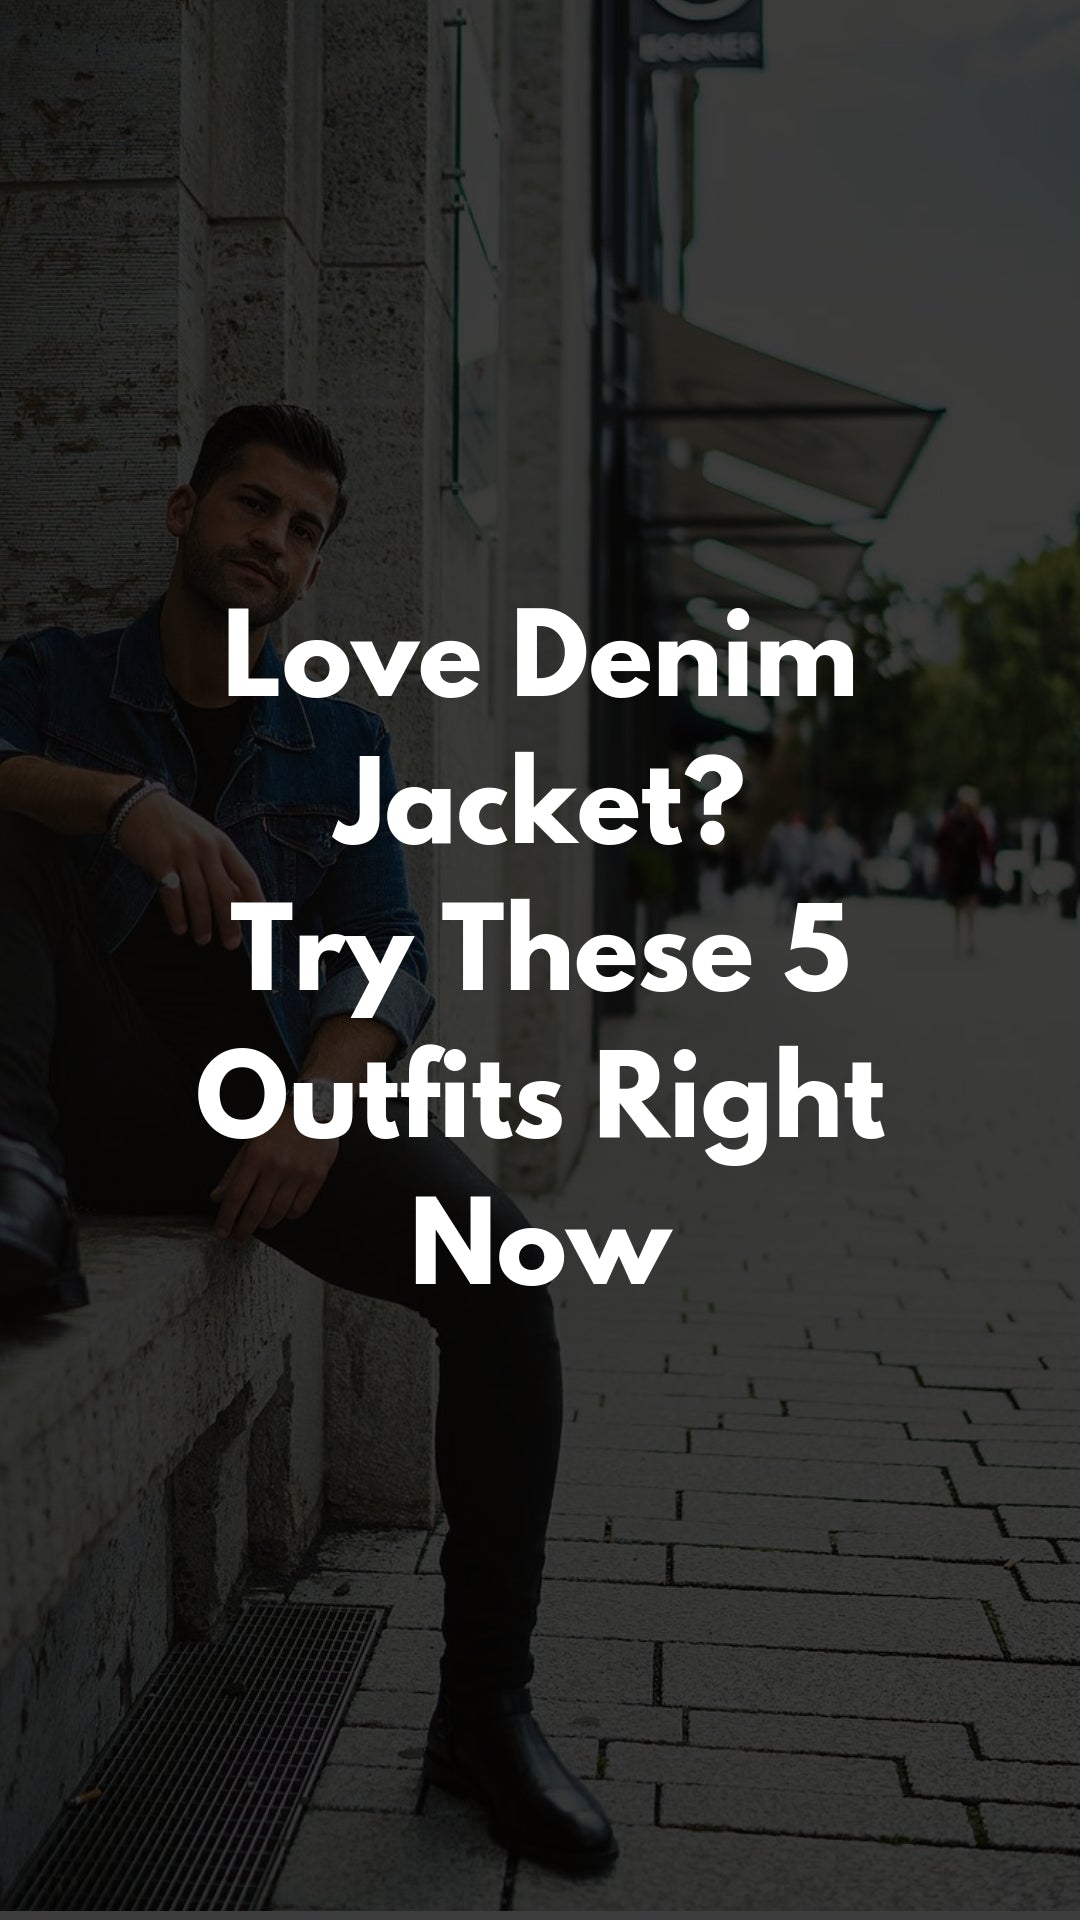 5 Denim Jacket Outfits For Men #denimjacket #outfits #mensfashion